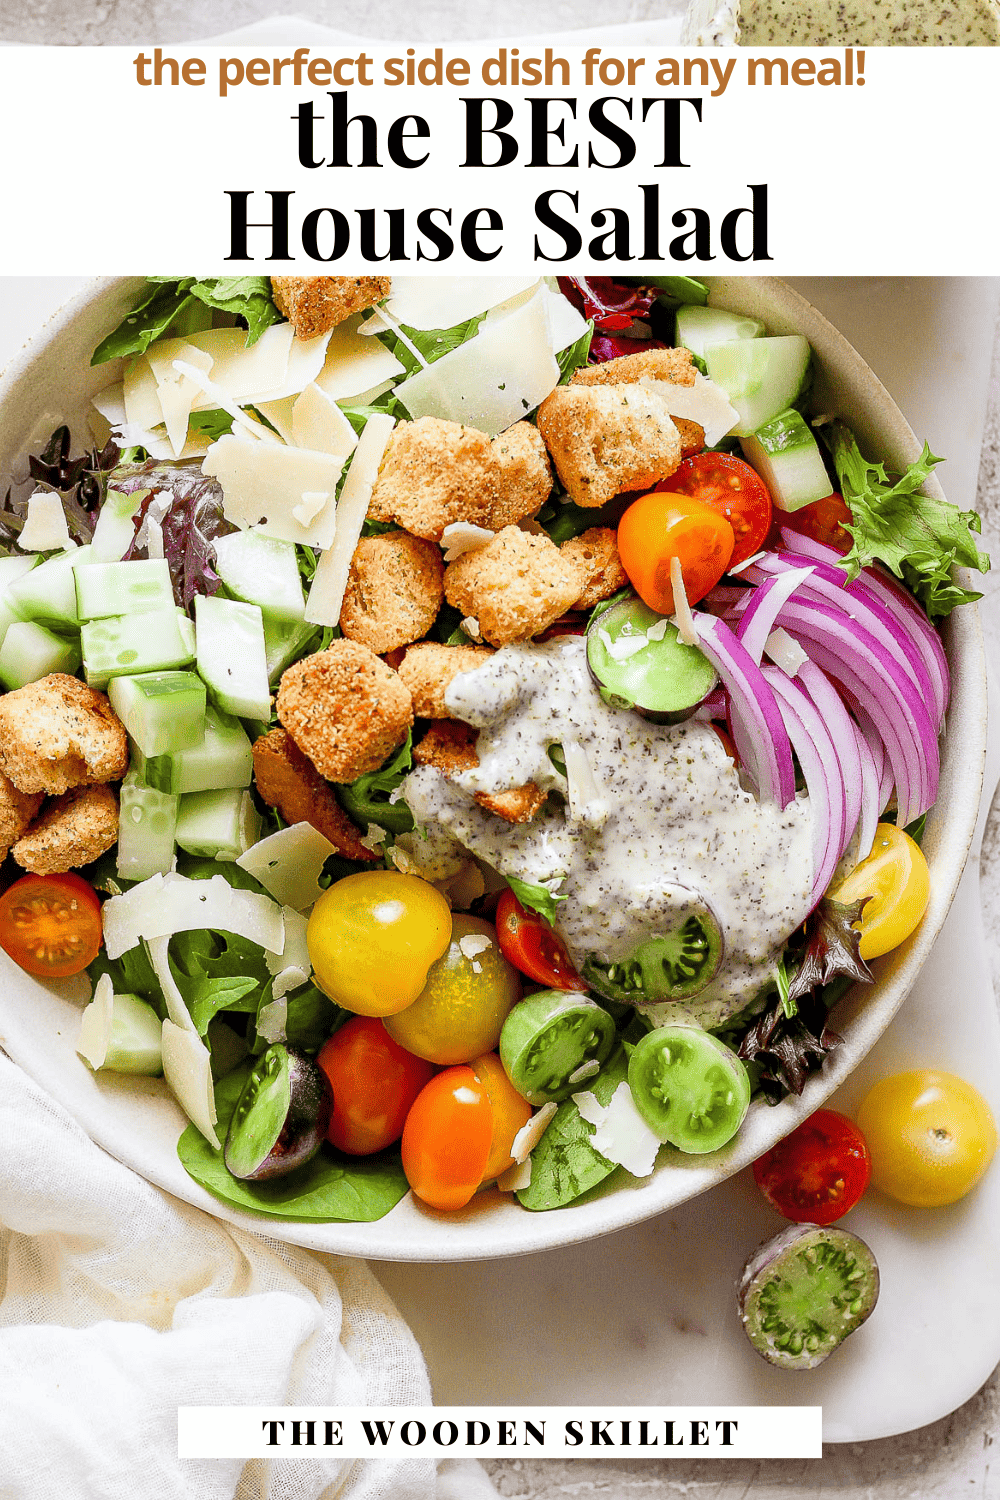 Pinterest image for house salad.